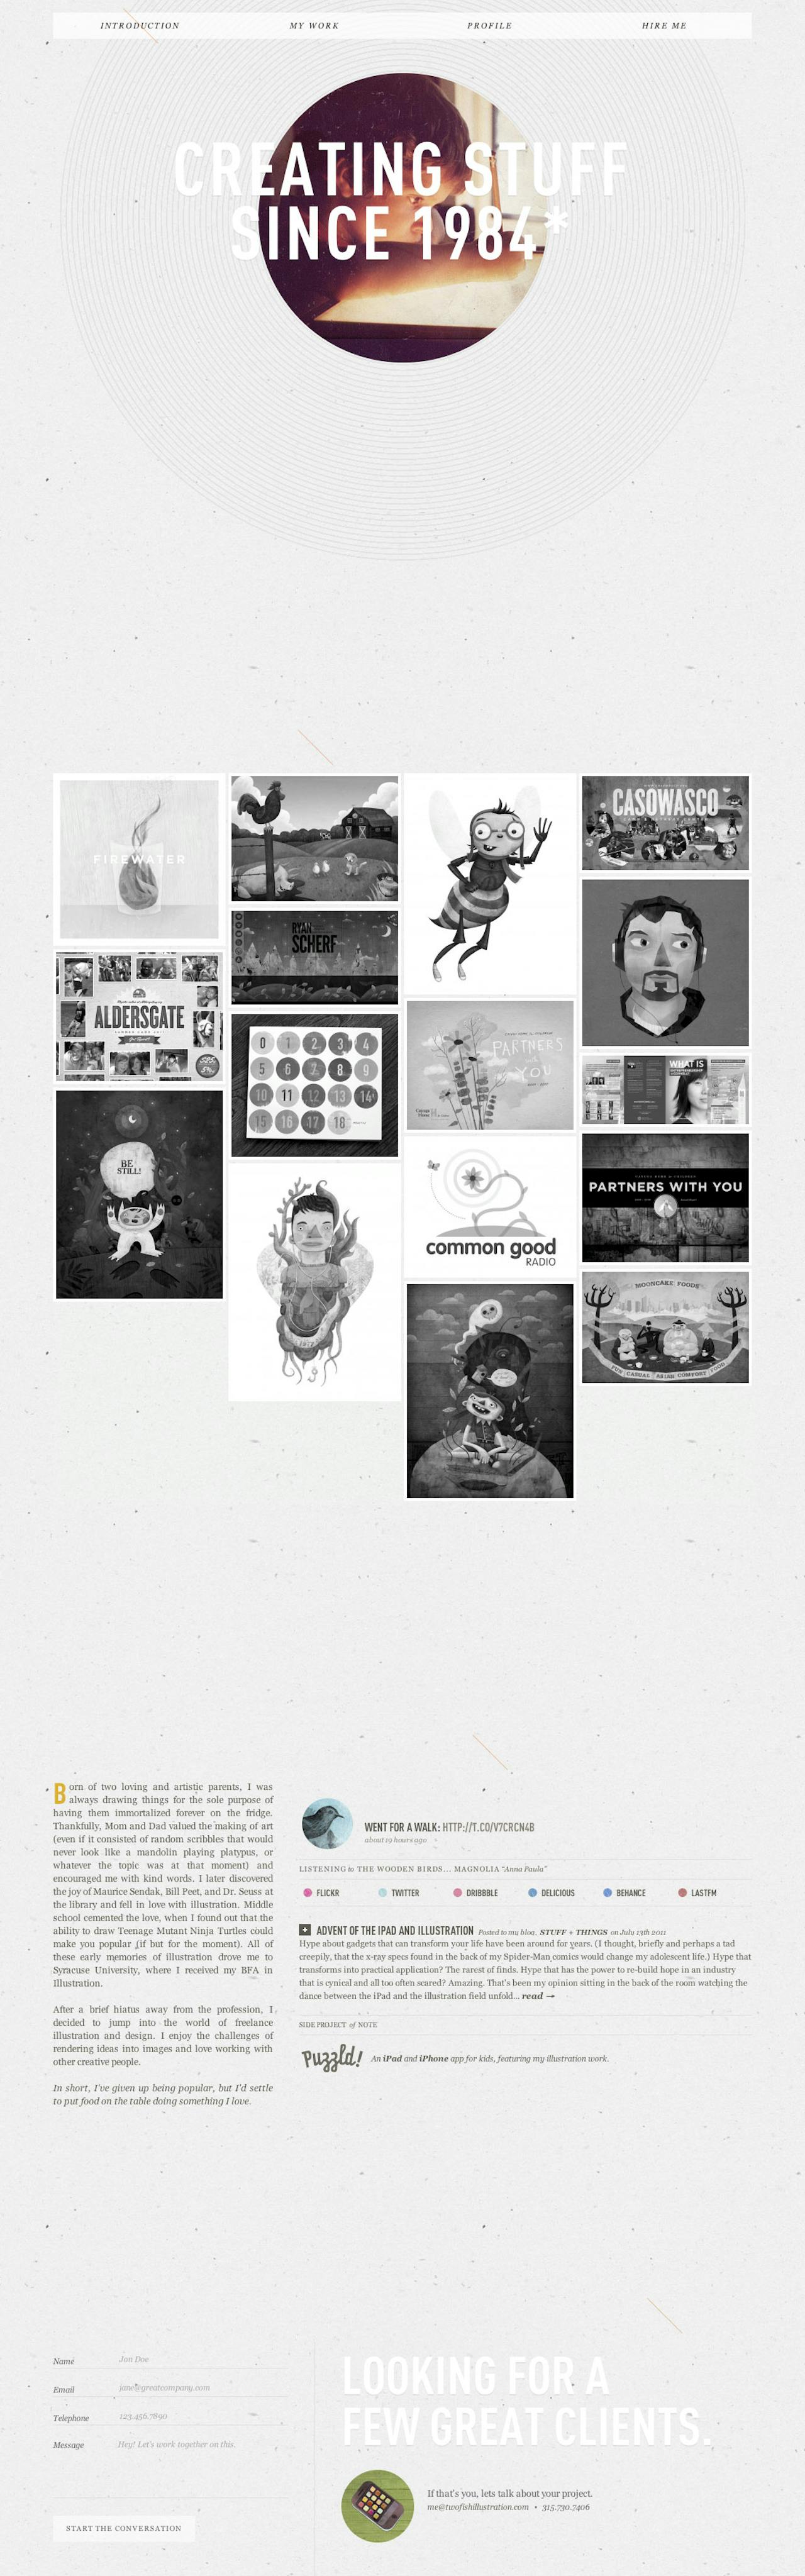 Two Fish Illustration & Design Website Screenshot